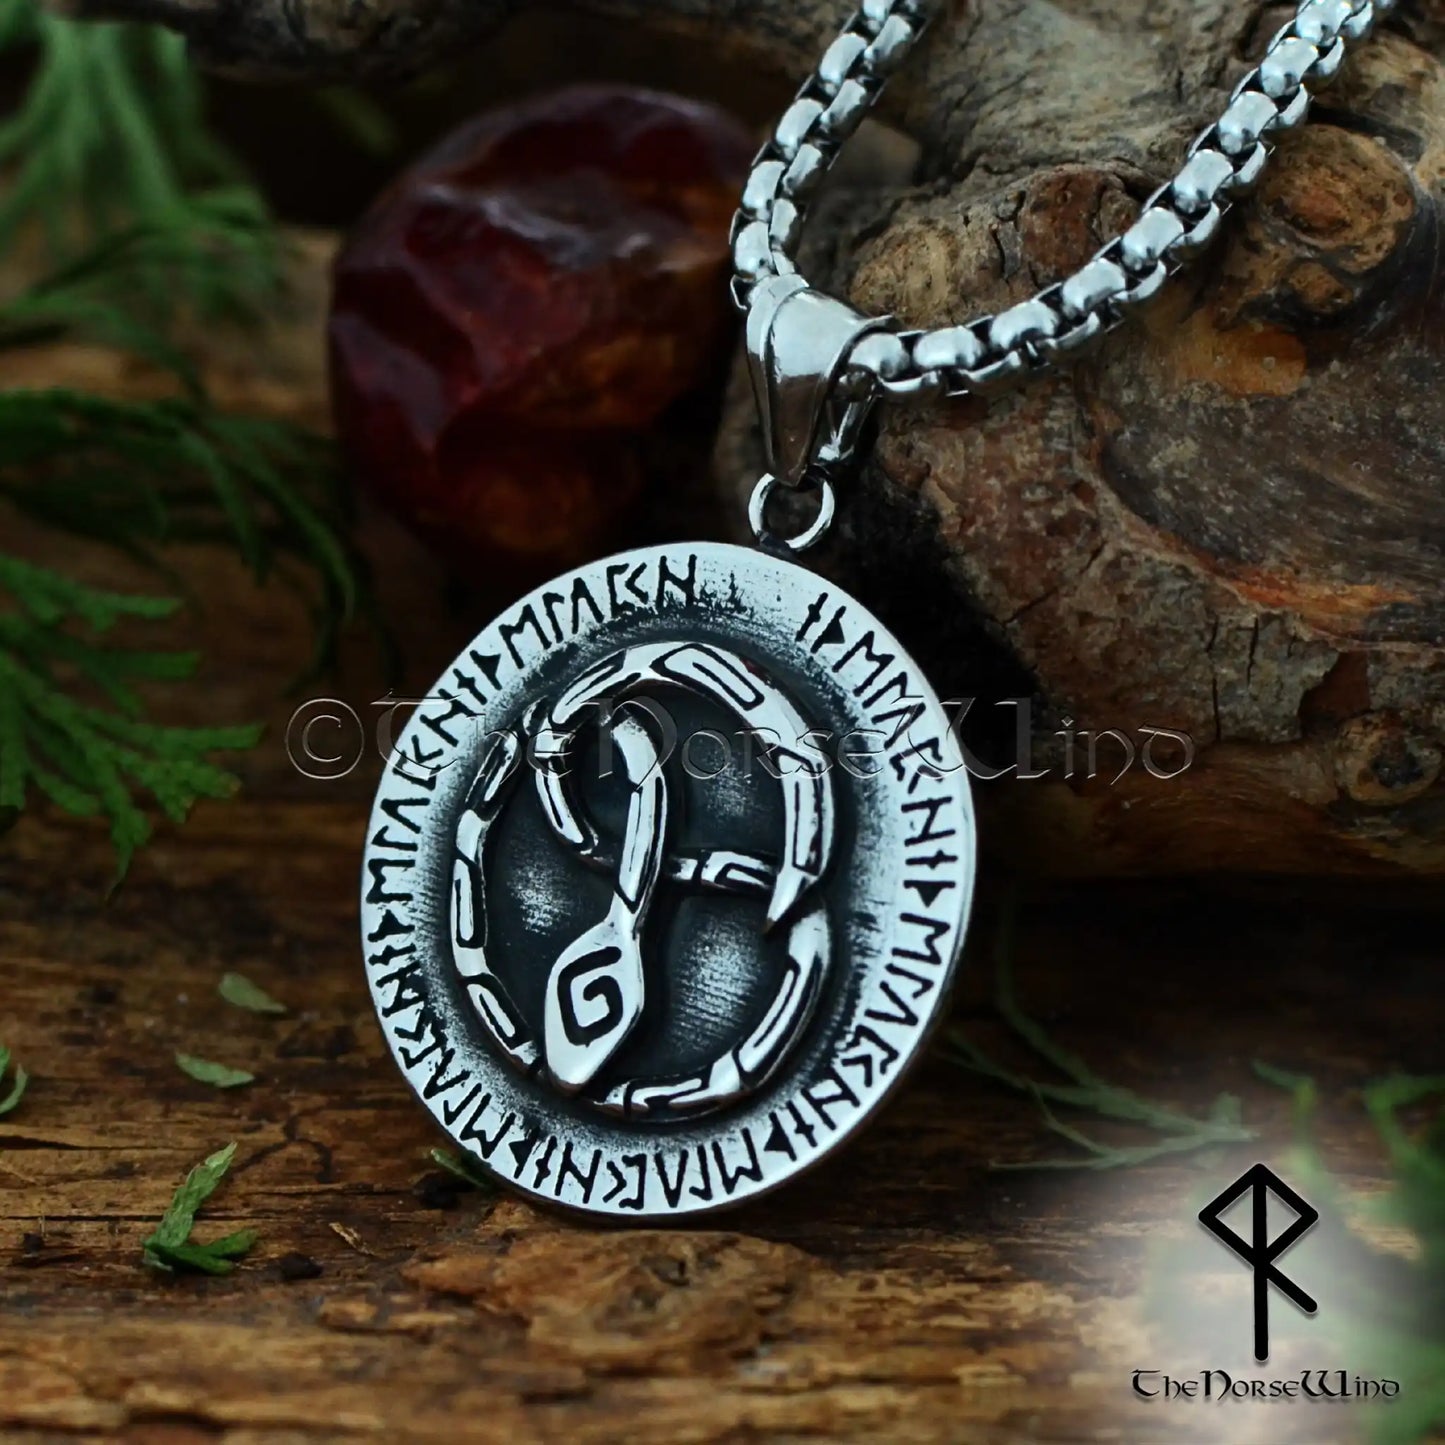 Jormungandr Midgard Schlangenhalskette, Wikinger-Runen-Amulett aus Edelstahl